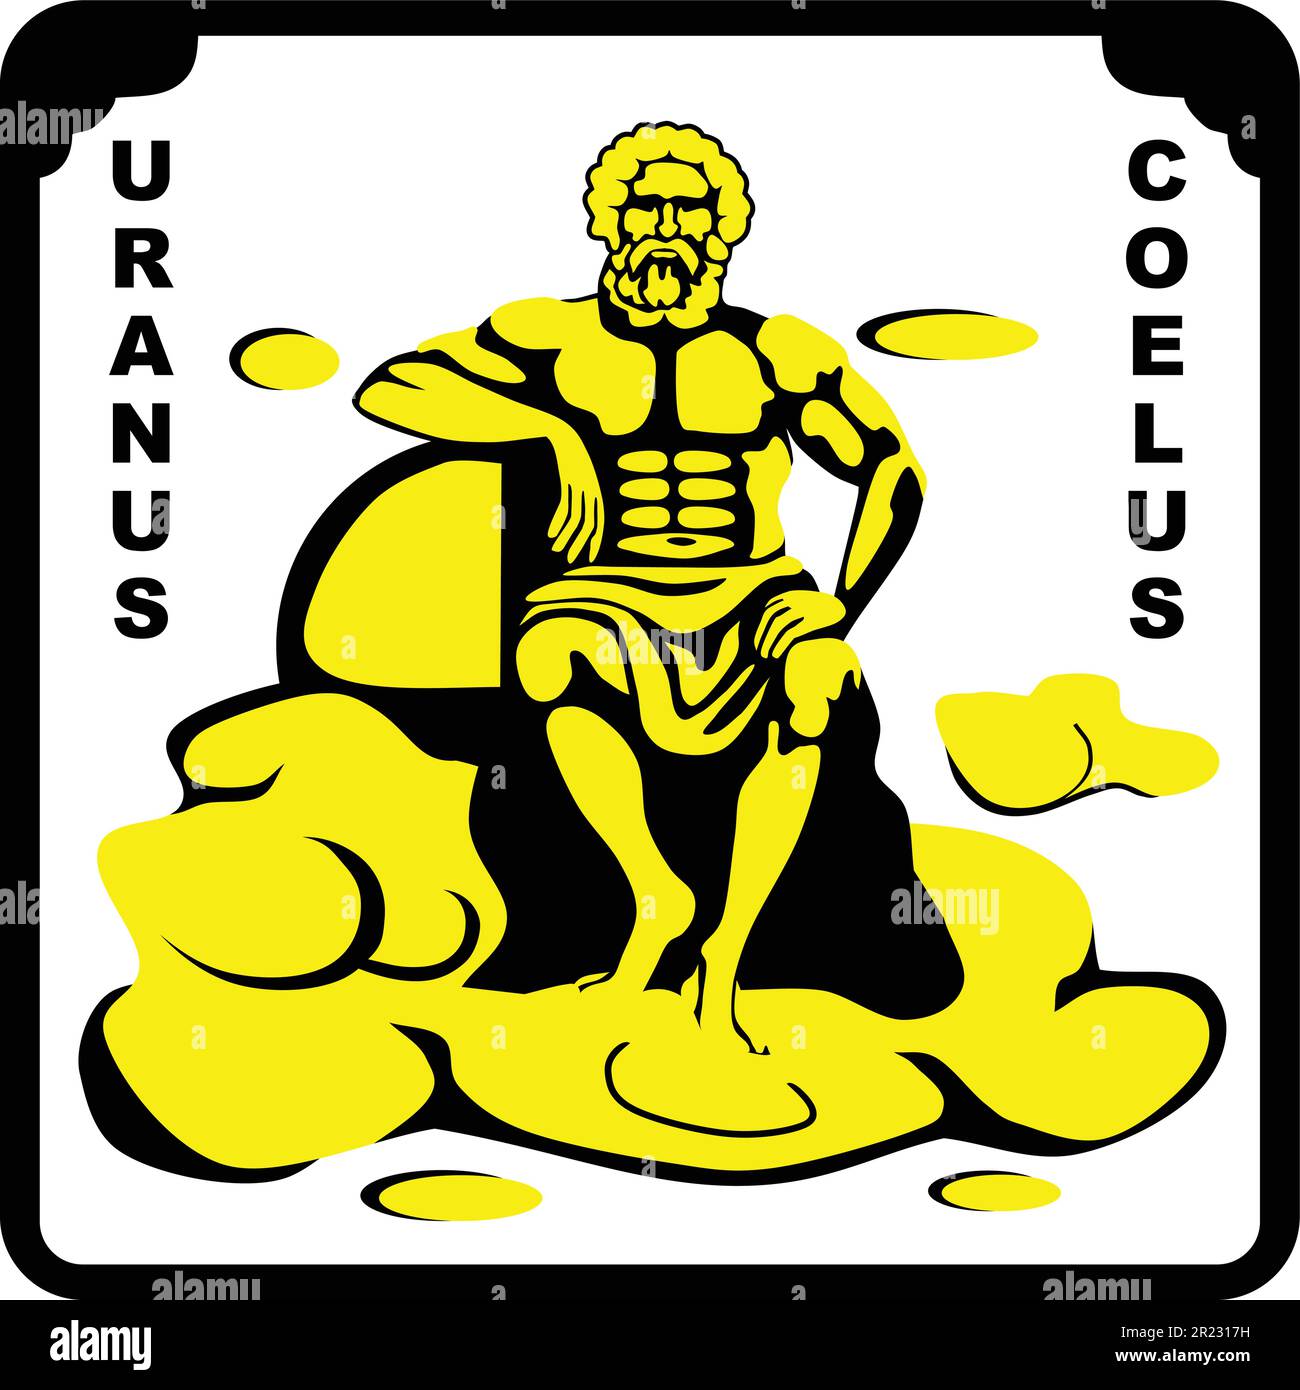 Uranus Coelus Deity of Greek and Rome Stock Vector